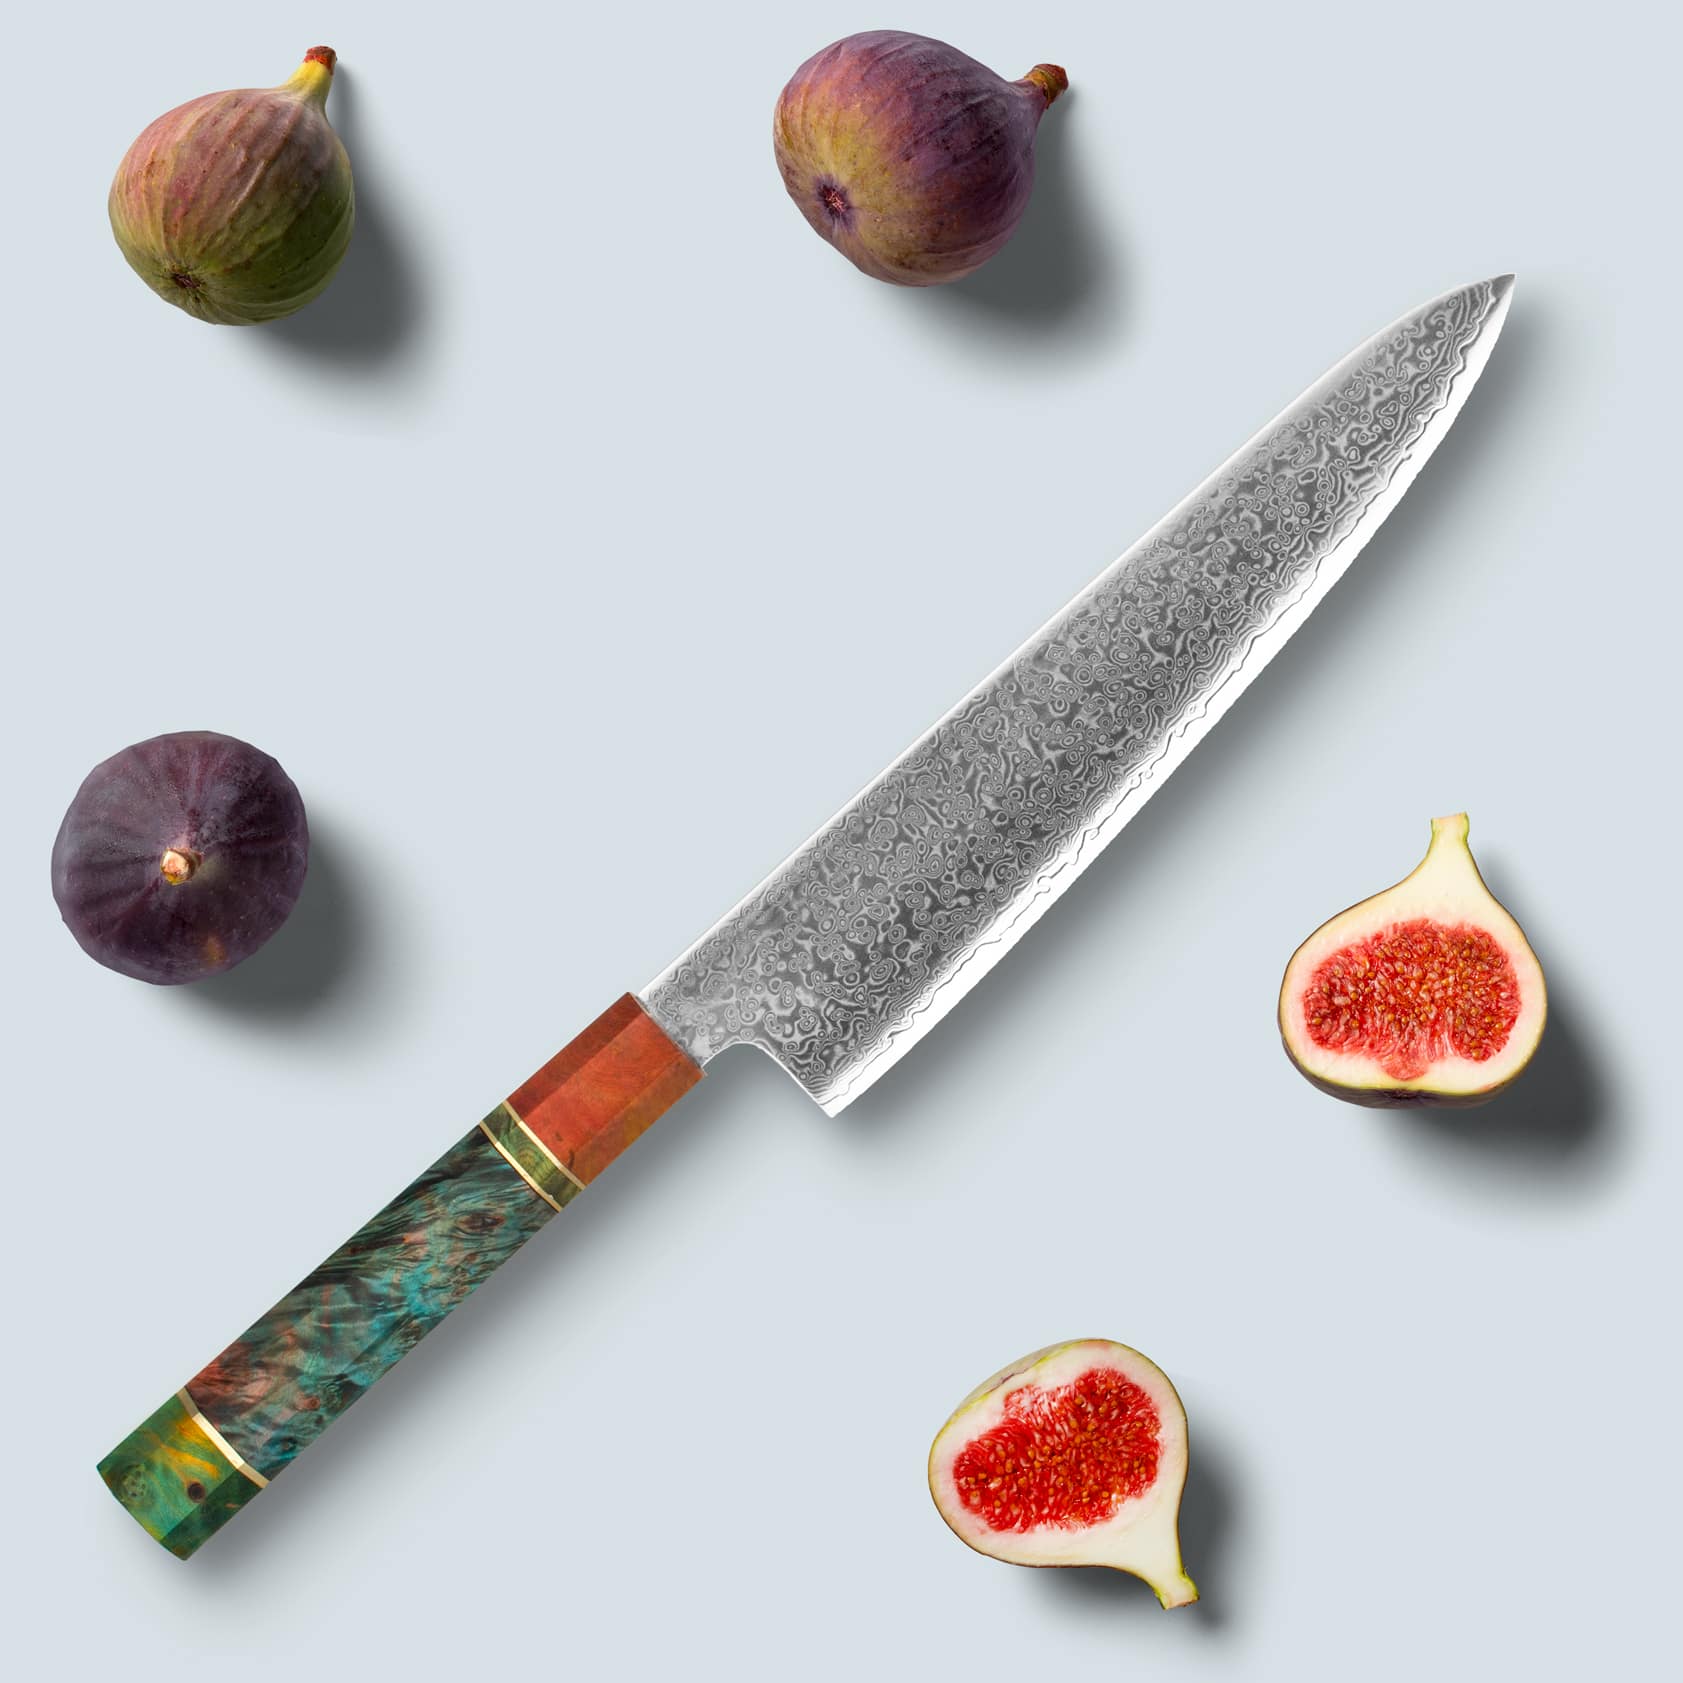 इचिका (いち か か か) रंगीन अष्टकोणीय हैंडल के साथ दमिश्क स्टील चाकू